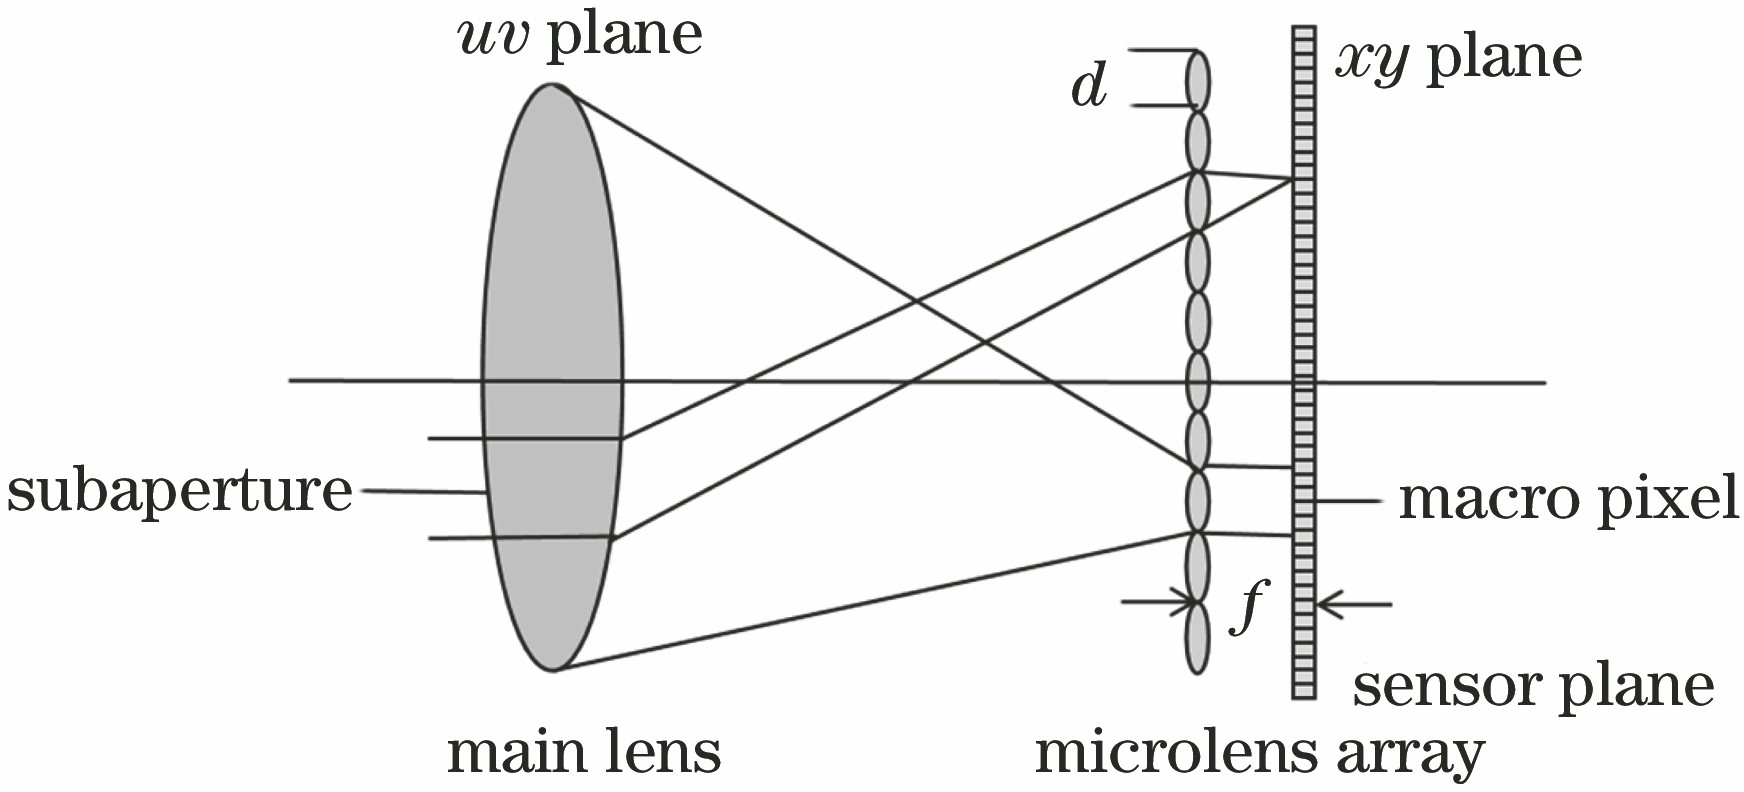 Imaging model of Lytro camera